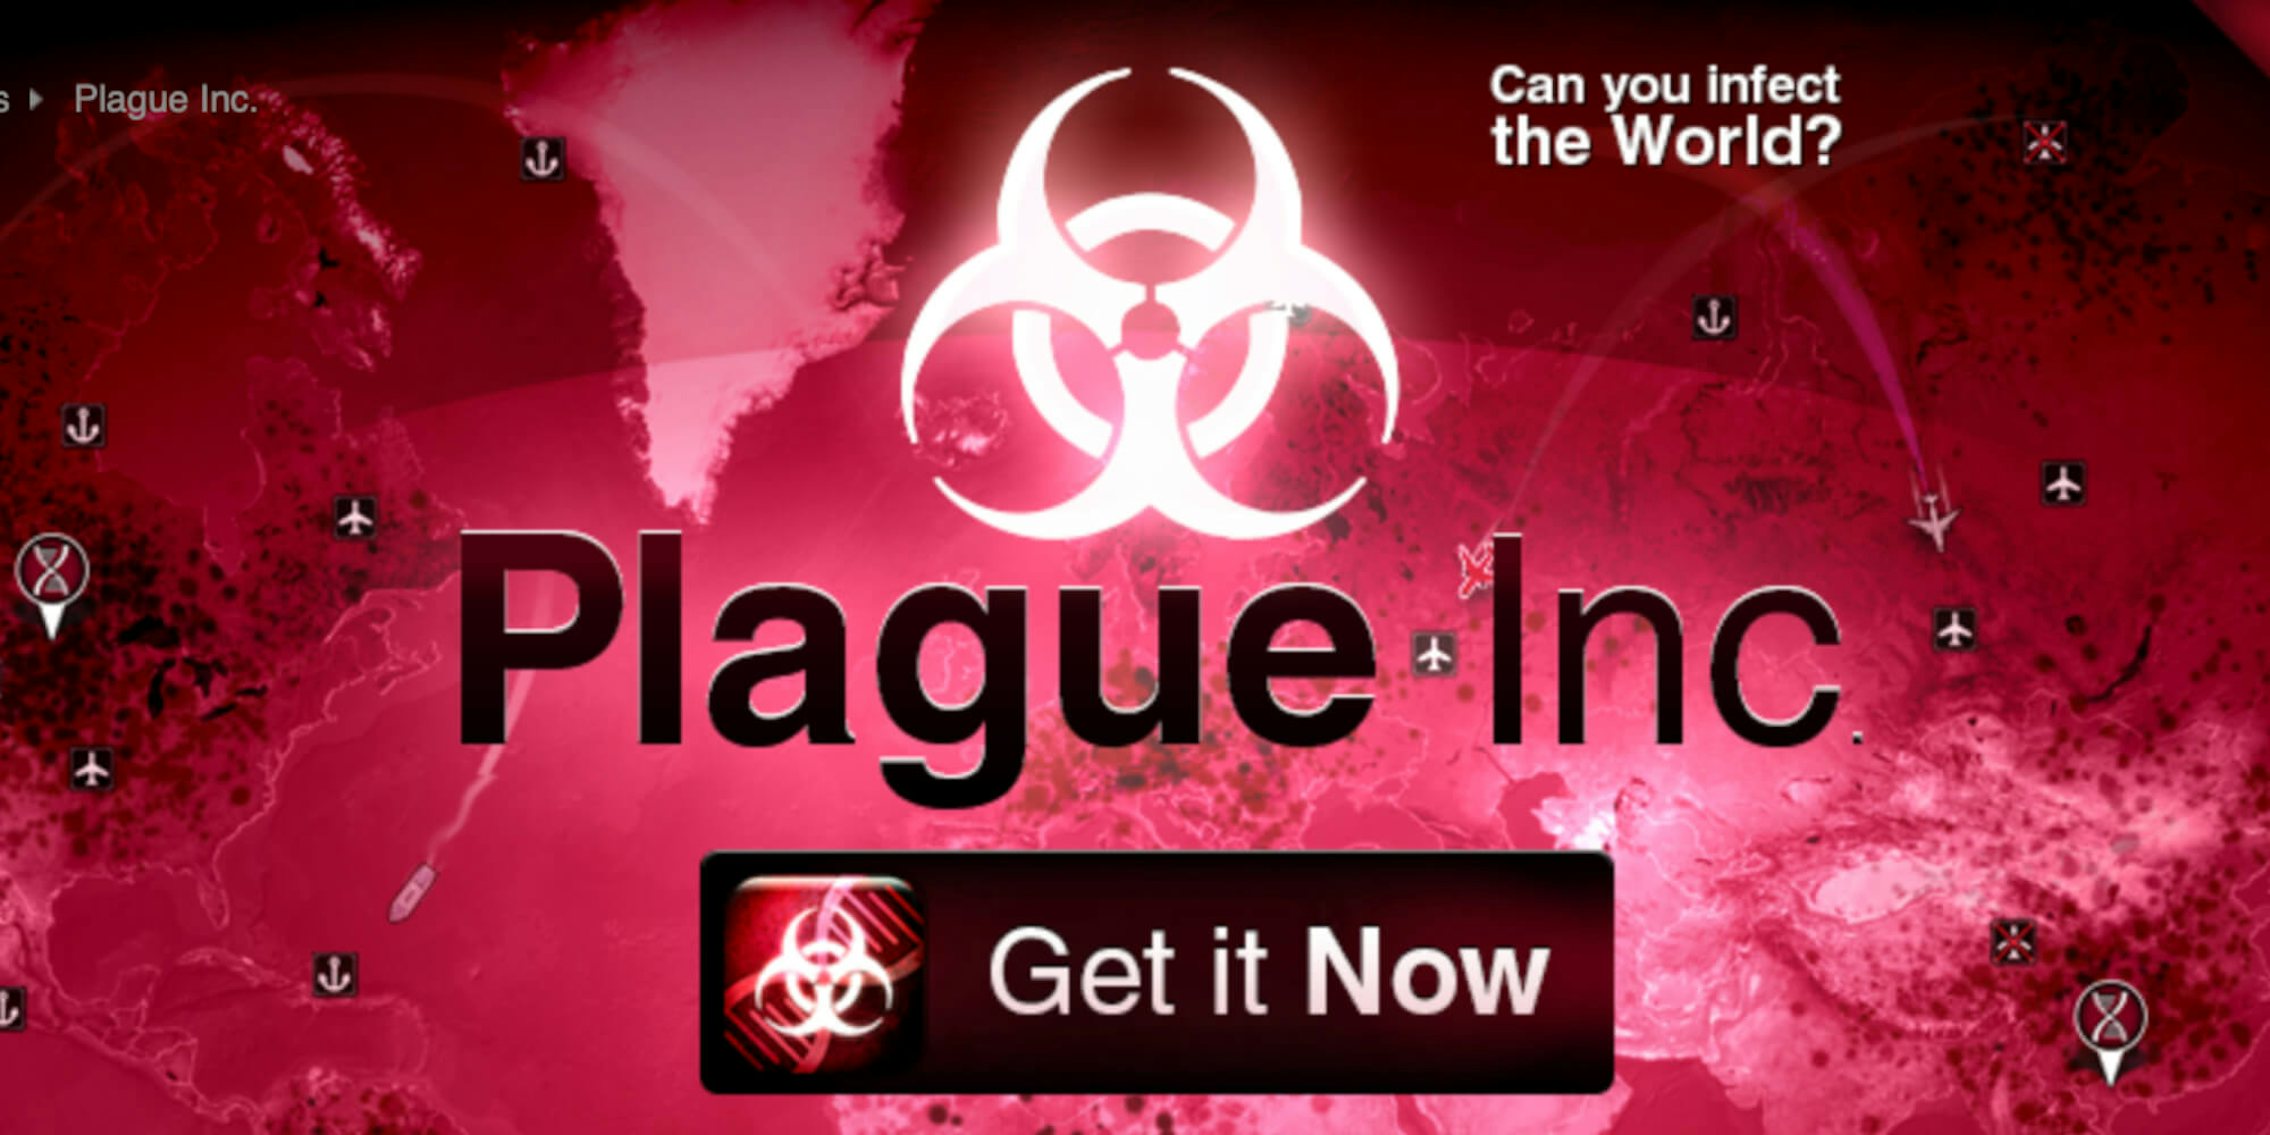 plague inc coronavirus game